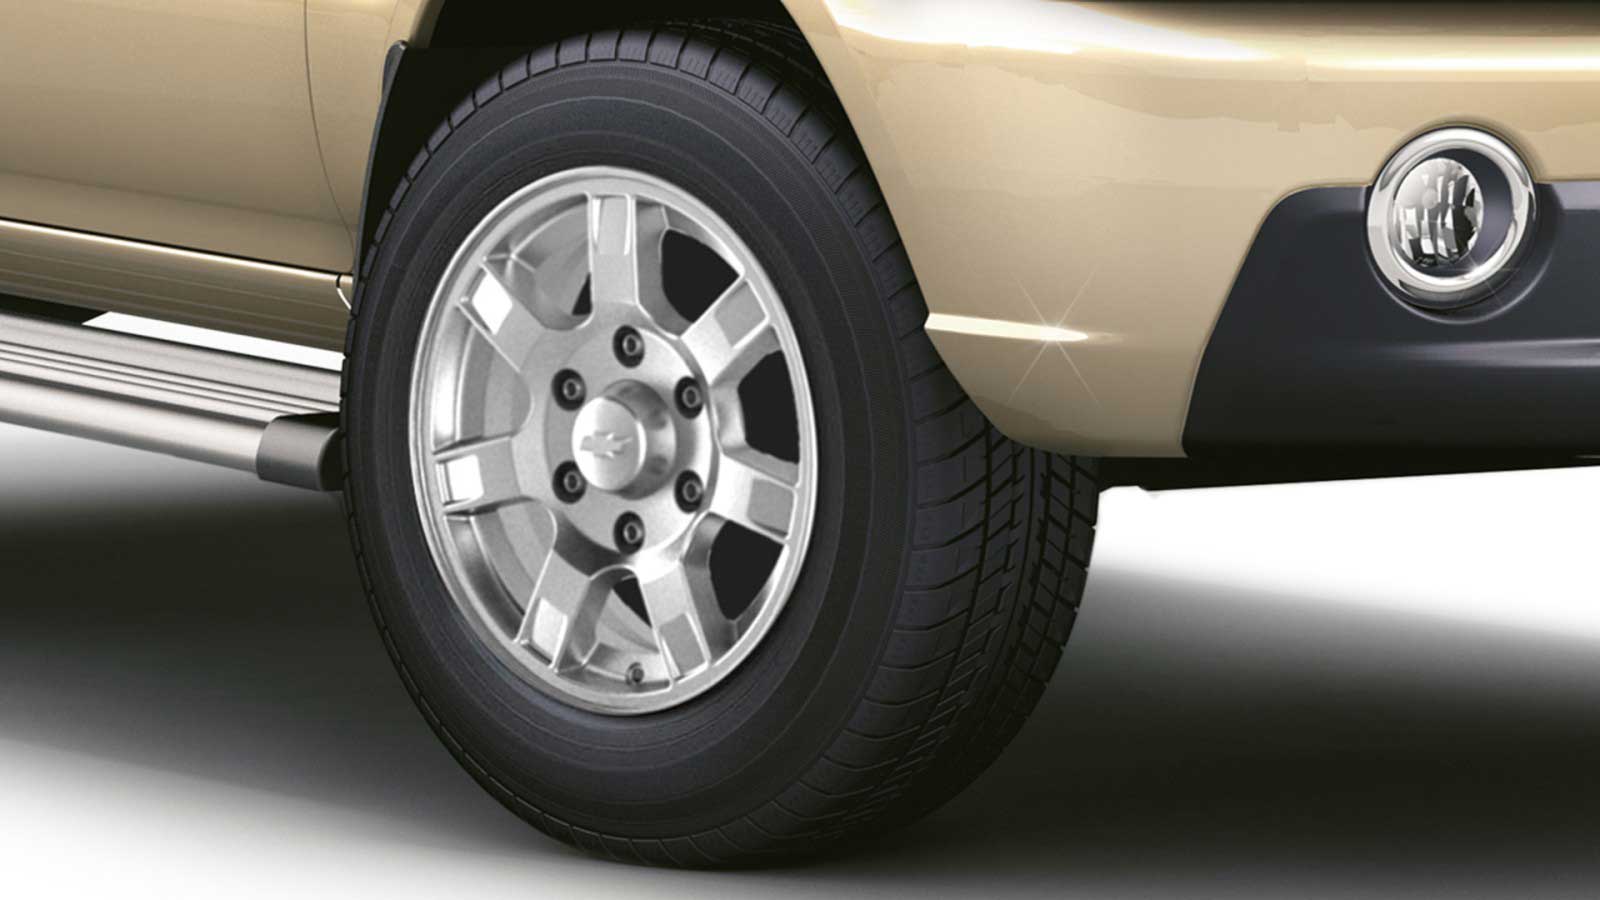 Chevrolet Tavera Neo 3 LT 9 STR BSIII Exterior wheel